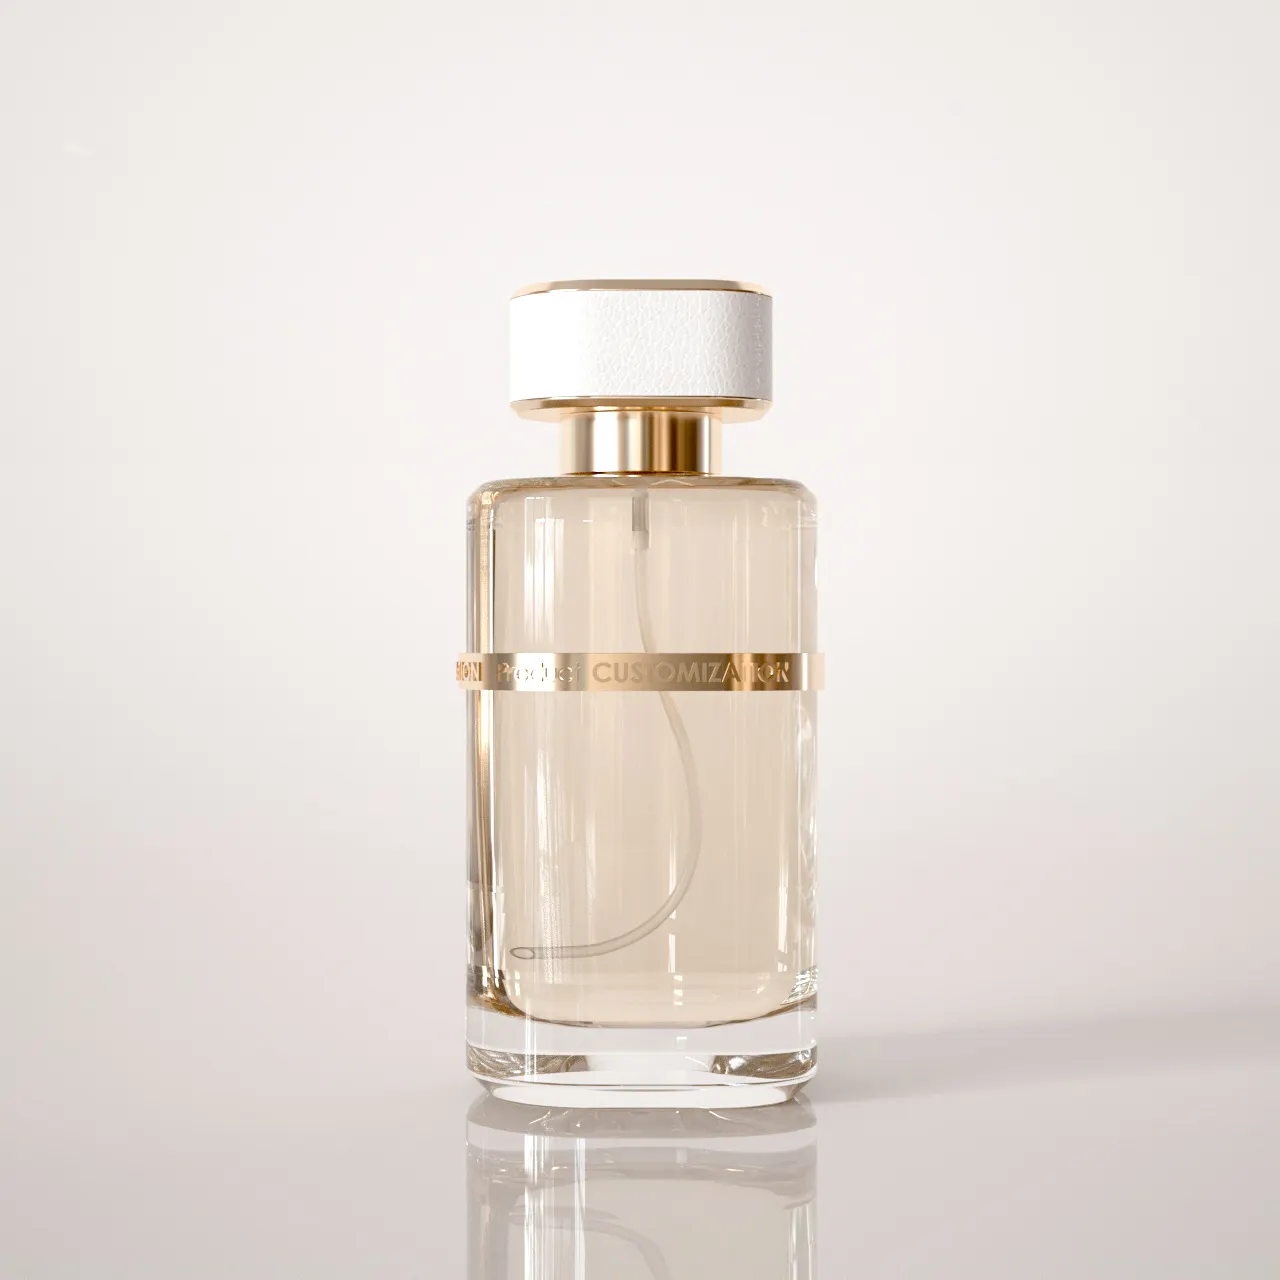 Garrafa de perfume personalizada de fábrica, embalagem de caixa, fabricante personalizado de garrafa de perfume